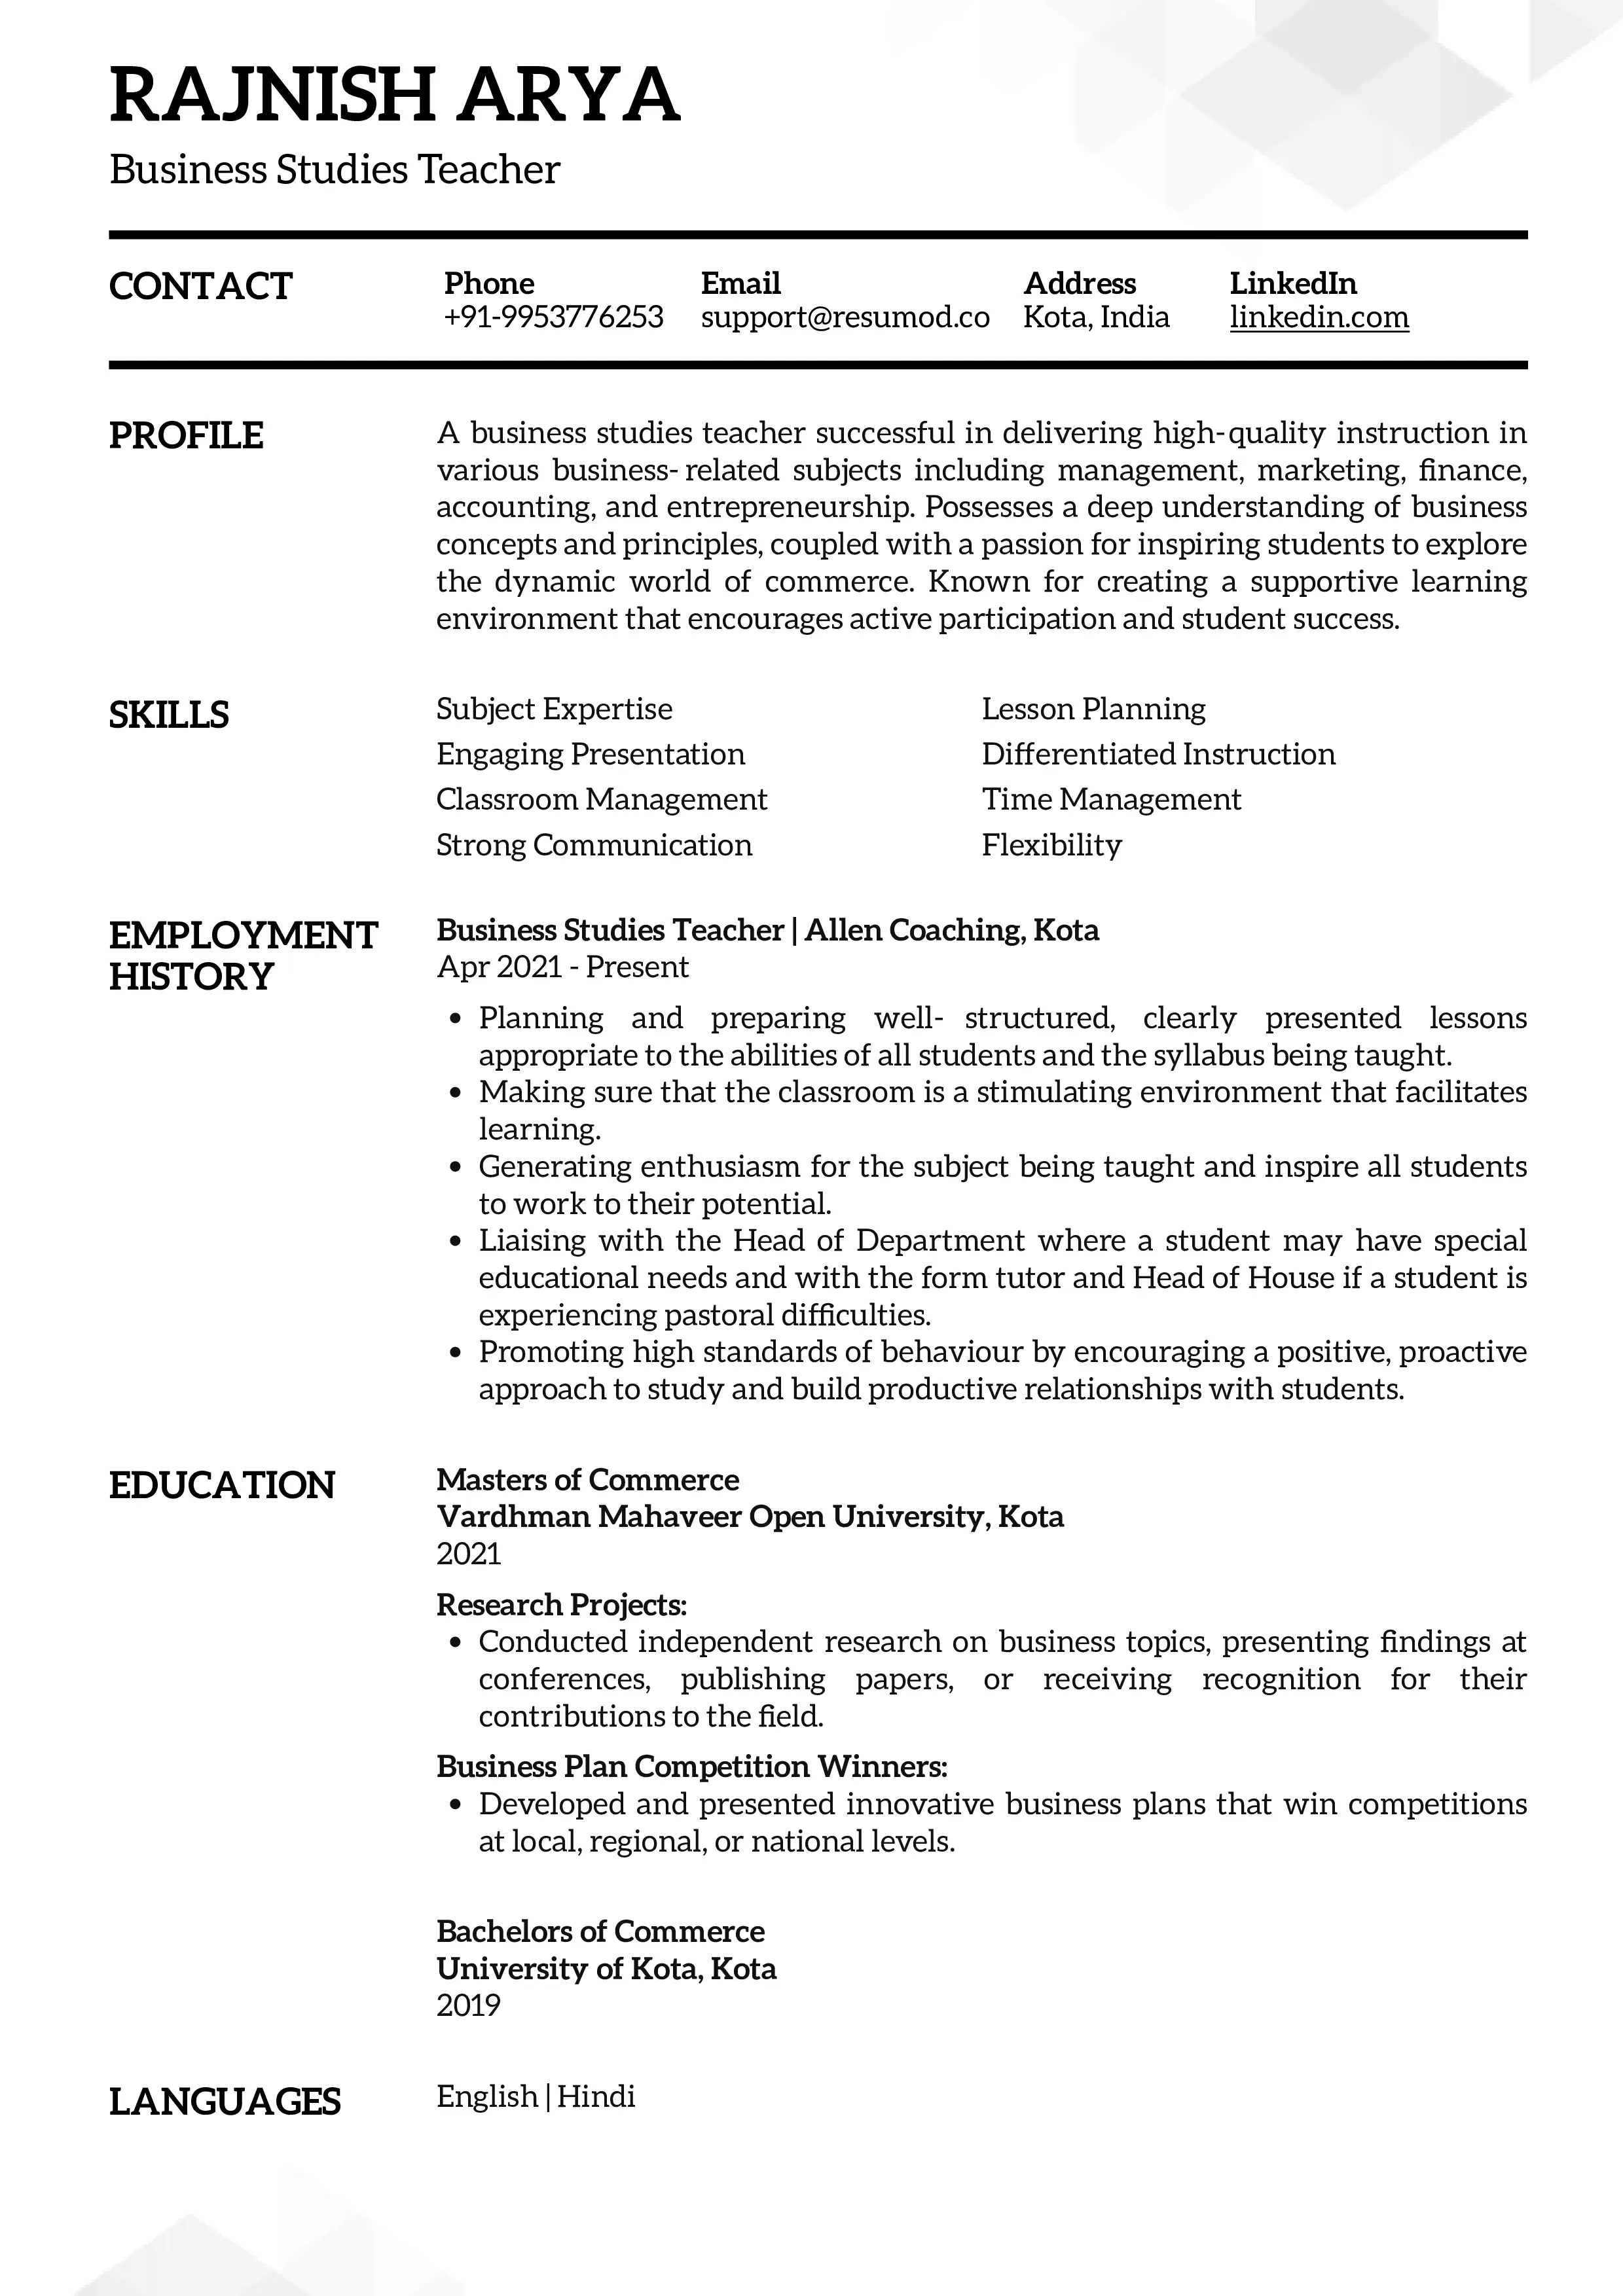 Sample Resume of Business Studies Teacher | Free Resume Templates & Samples on Resumod.co